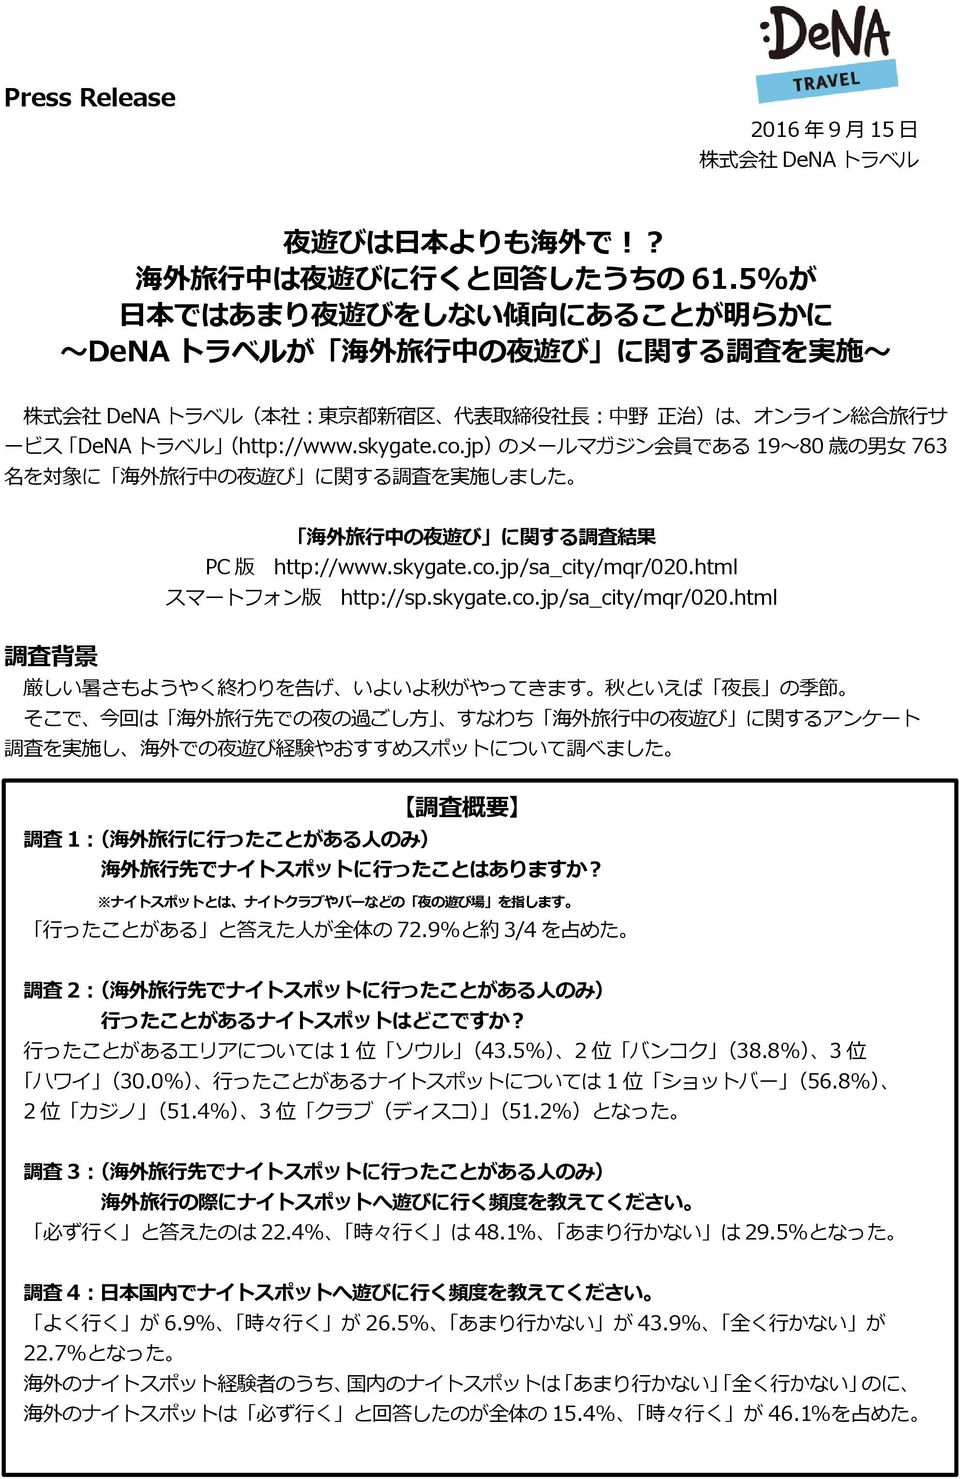 skygate.co.jp)のメールマガジン 会 員 である 19~80 歳 の 男 女 763 名 を 対 象 に 海 外 旅 行 中 の 夜 遊 び に 関 する 調 査 を 実 施 しました 海 外 旅 行 中 の 夜 遊 び に 関 する 調 査 結 果 PC 版 http://www.skygate.co.jp/sa_city/mqr/020.